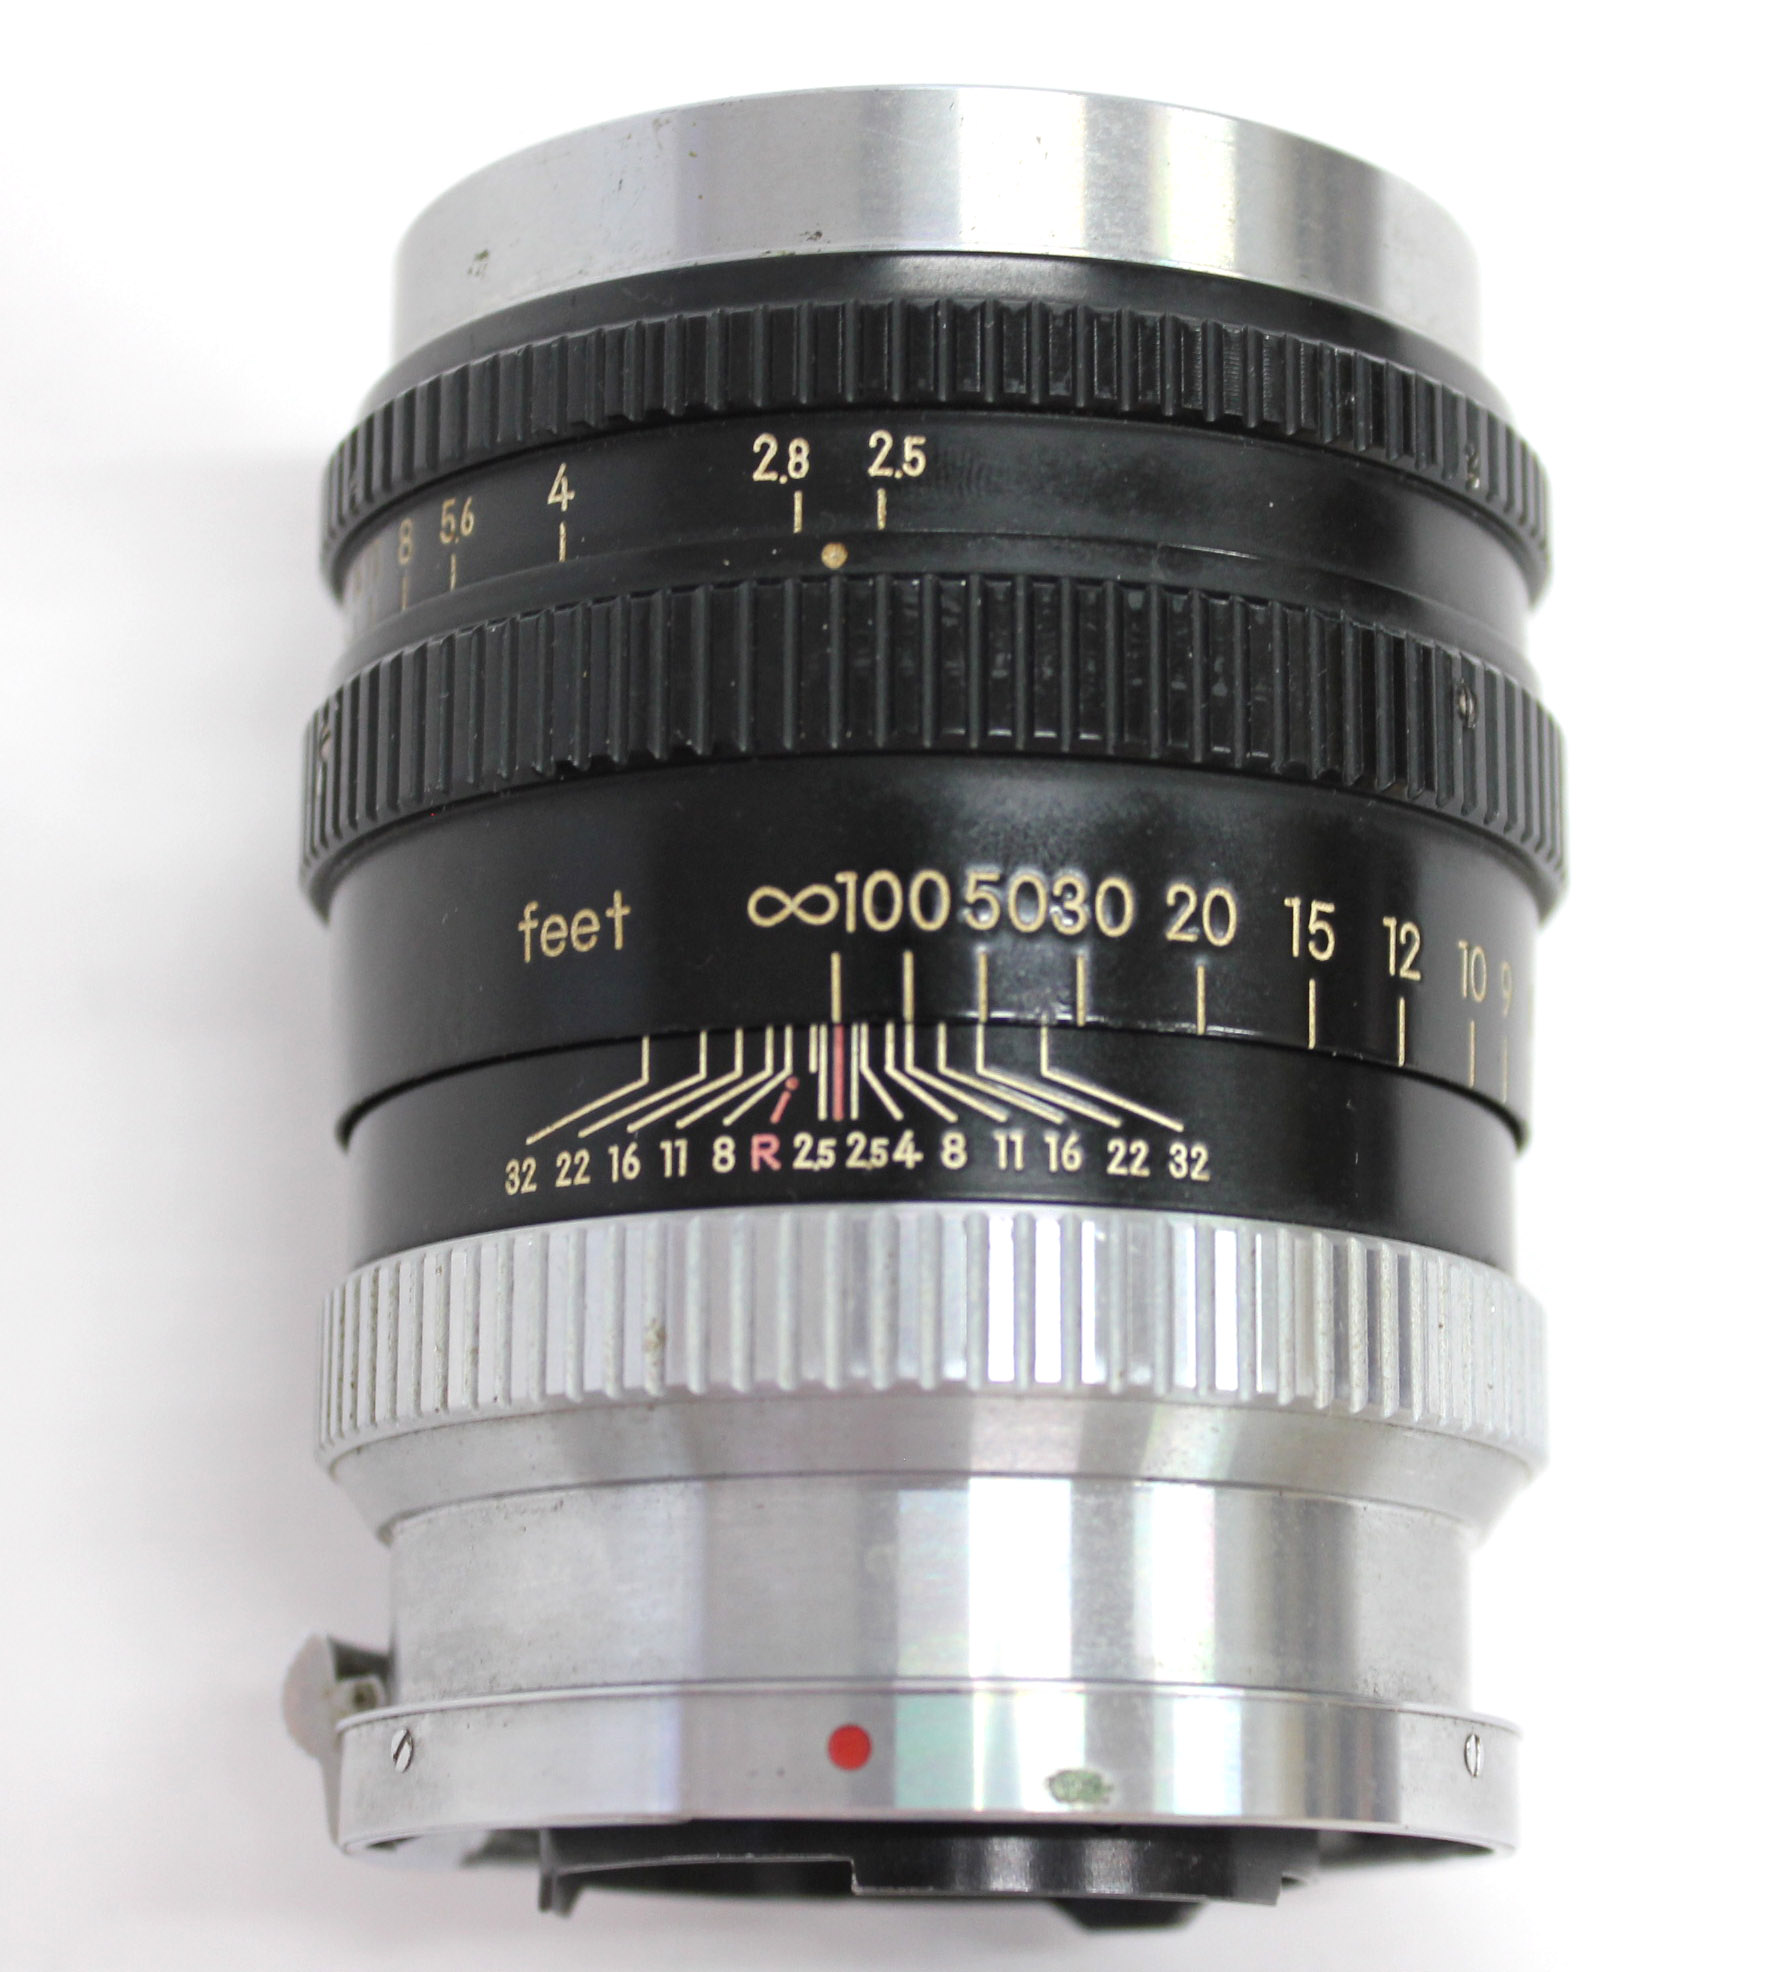  Nikon Nippon Kogaku  Nikkor-P 10.5cm 105mm F/2.5 Nikon S Mount Lens with Hood and Case from Japan  Photo 3